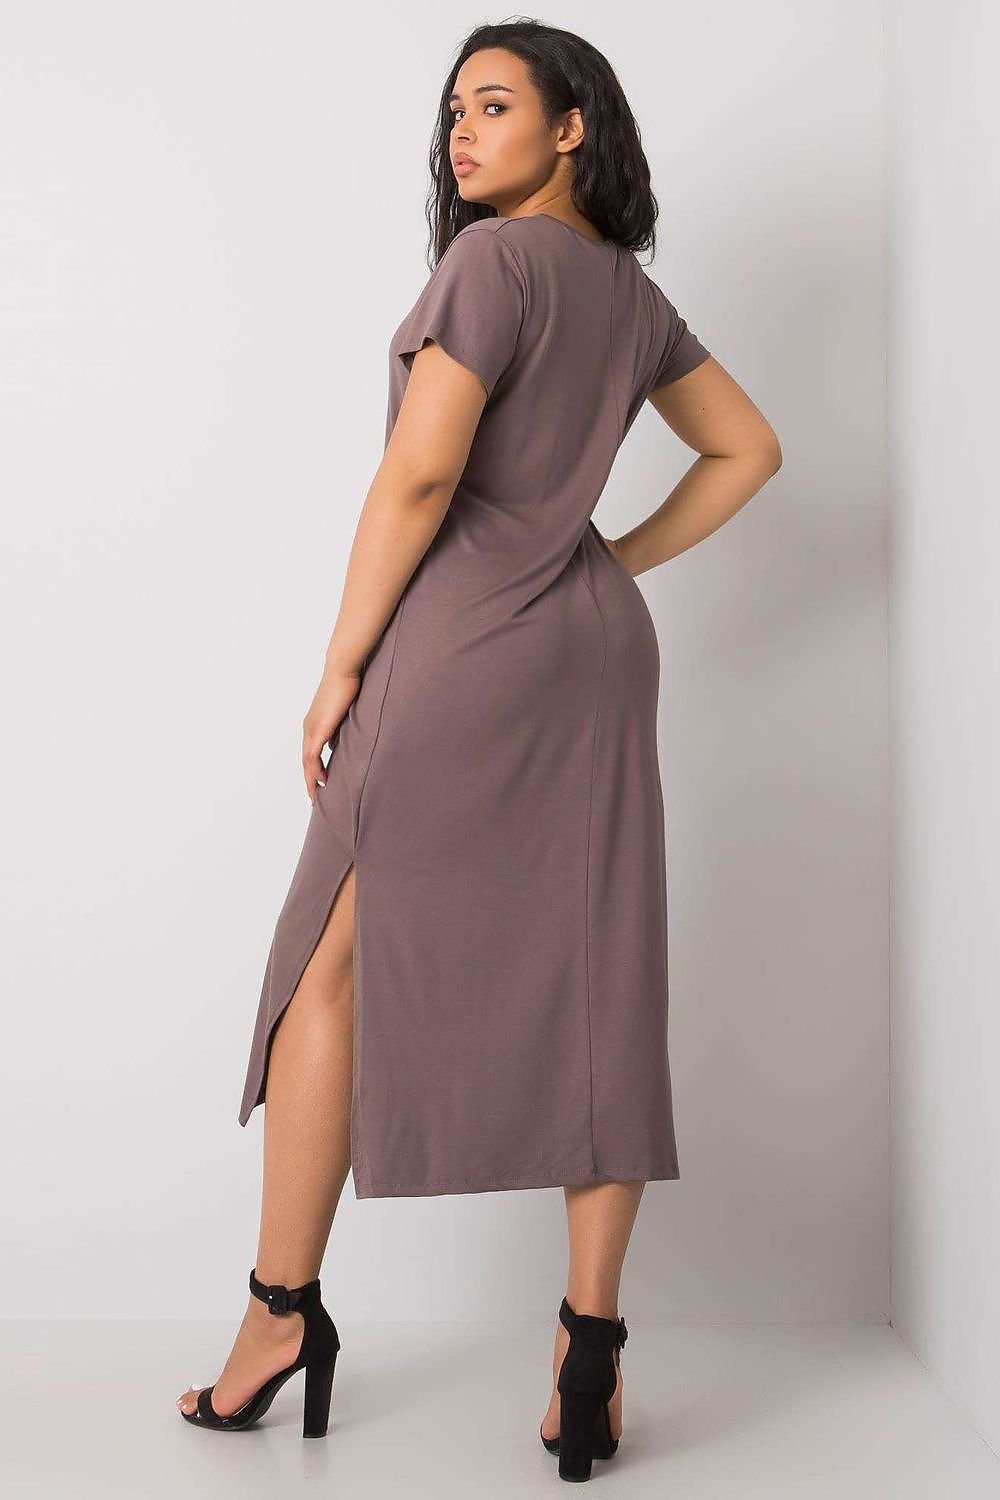 BFG Plus Size Versatile Midi Dress with Short Sleeves